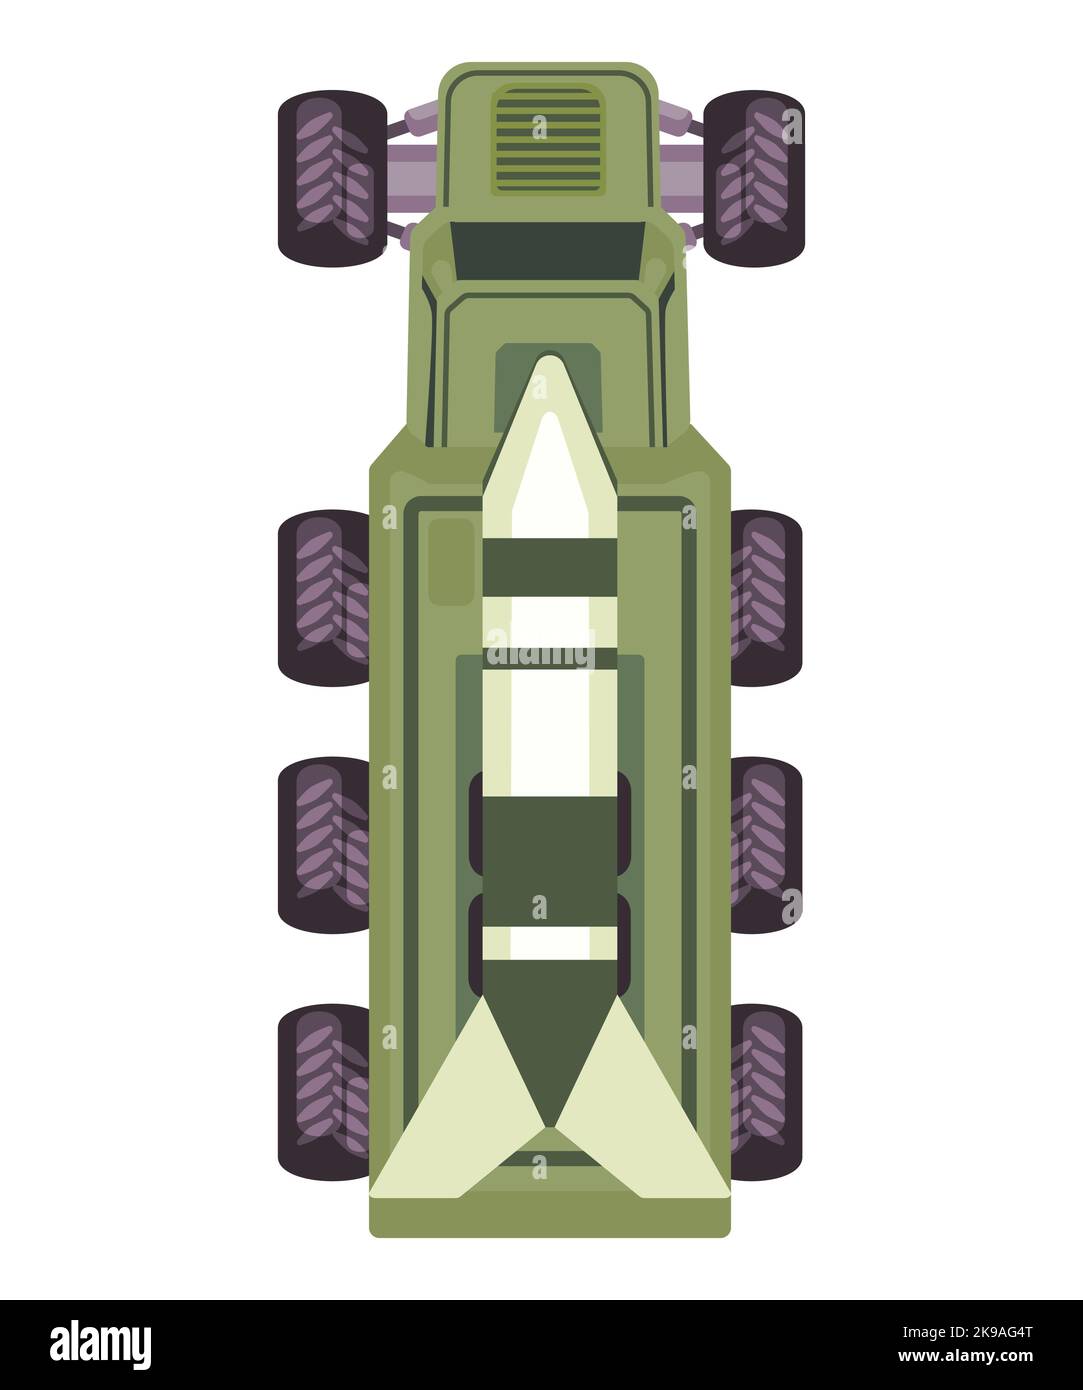 Rakete Raketenwerfer LKW Krieg Fahrzeug Draufsicht Spiel Grafik Asset Stock Vektor